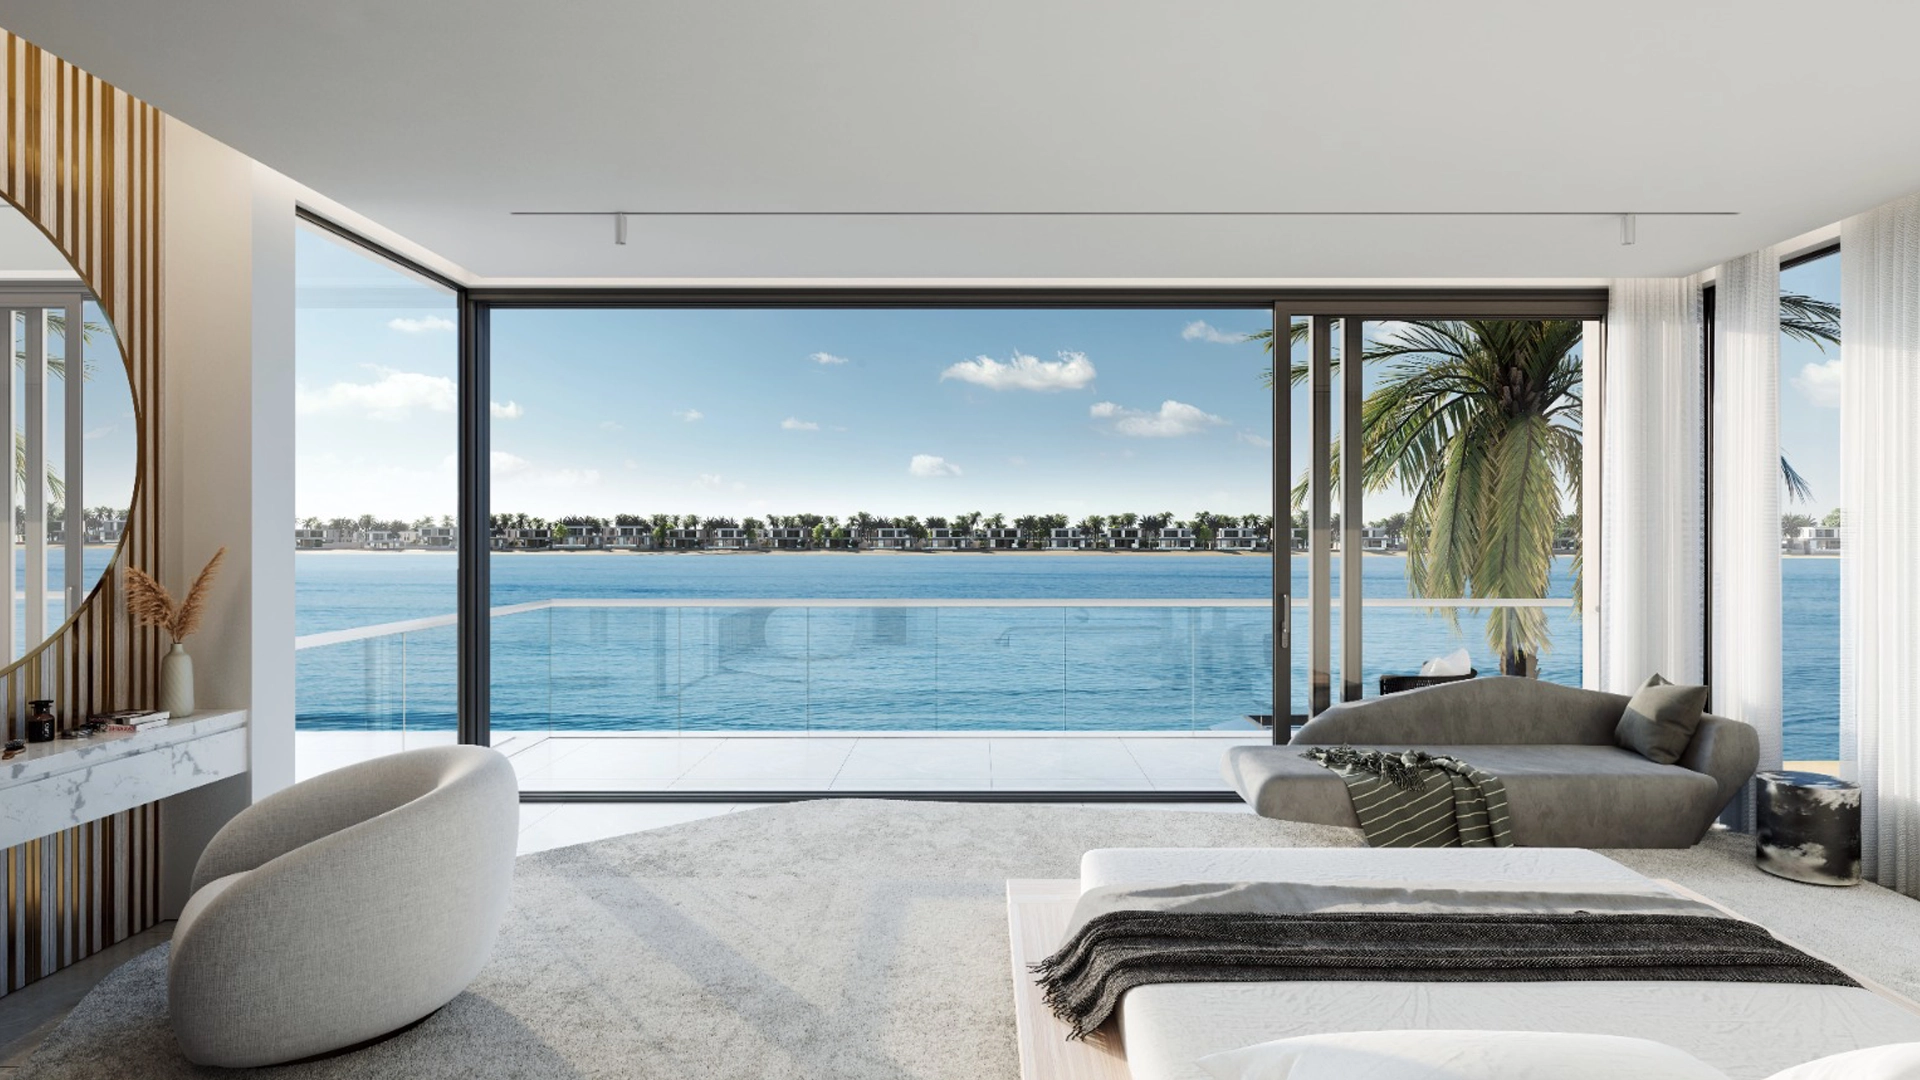 Edge-Realty-7 BR Luxury Villa In Palm Jebel Ali For Sale